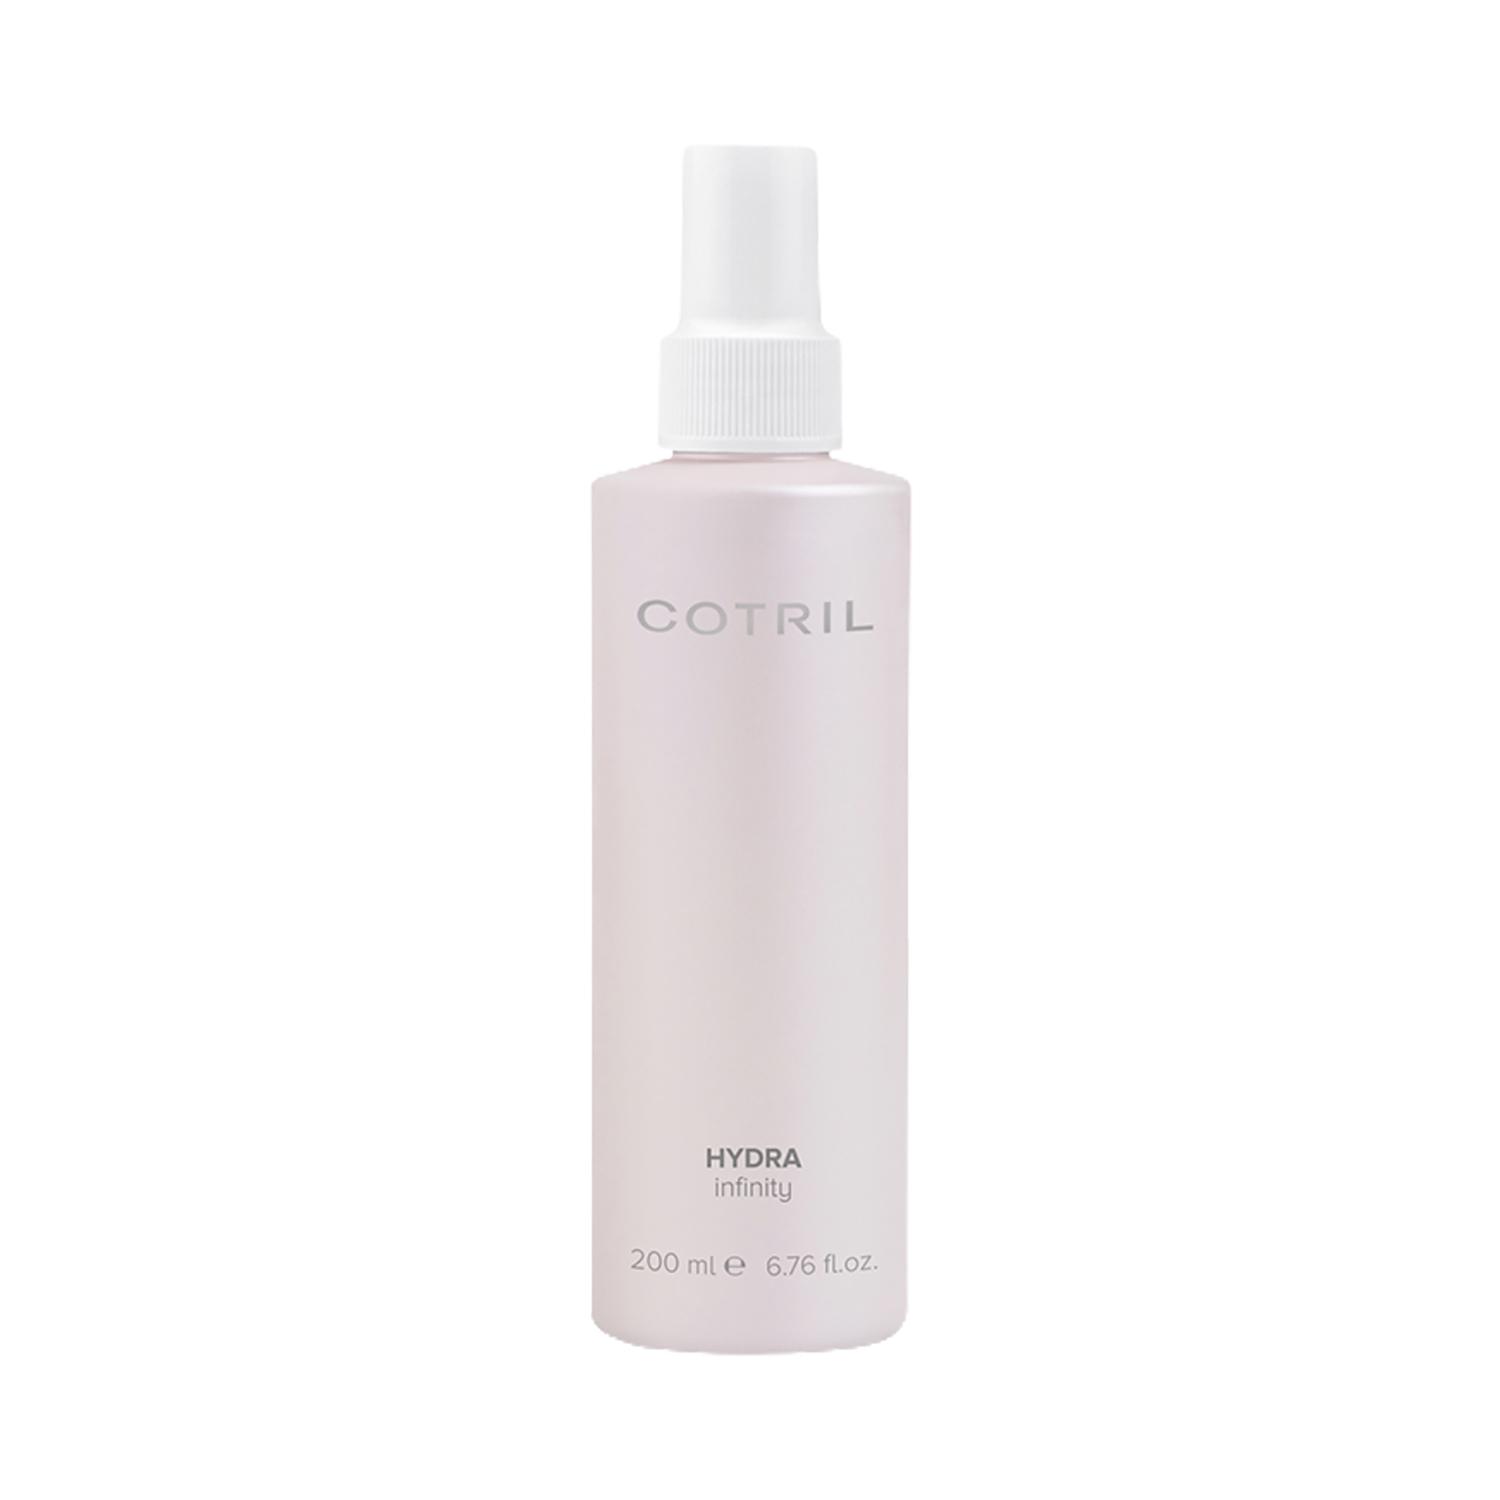 COTRIL Hydra Infinity Intensive Multipurpose Spray Hair Mask (200 ml)